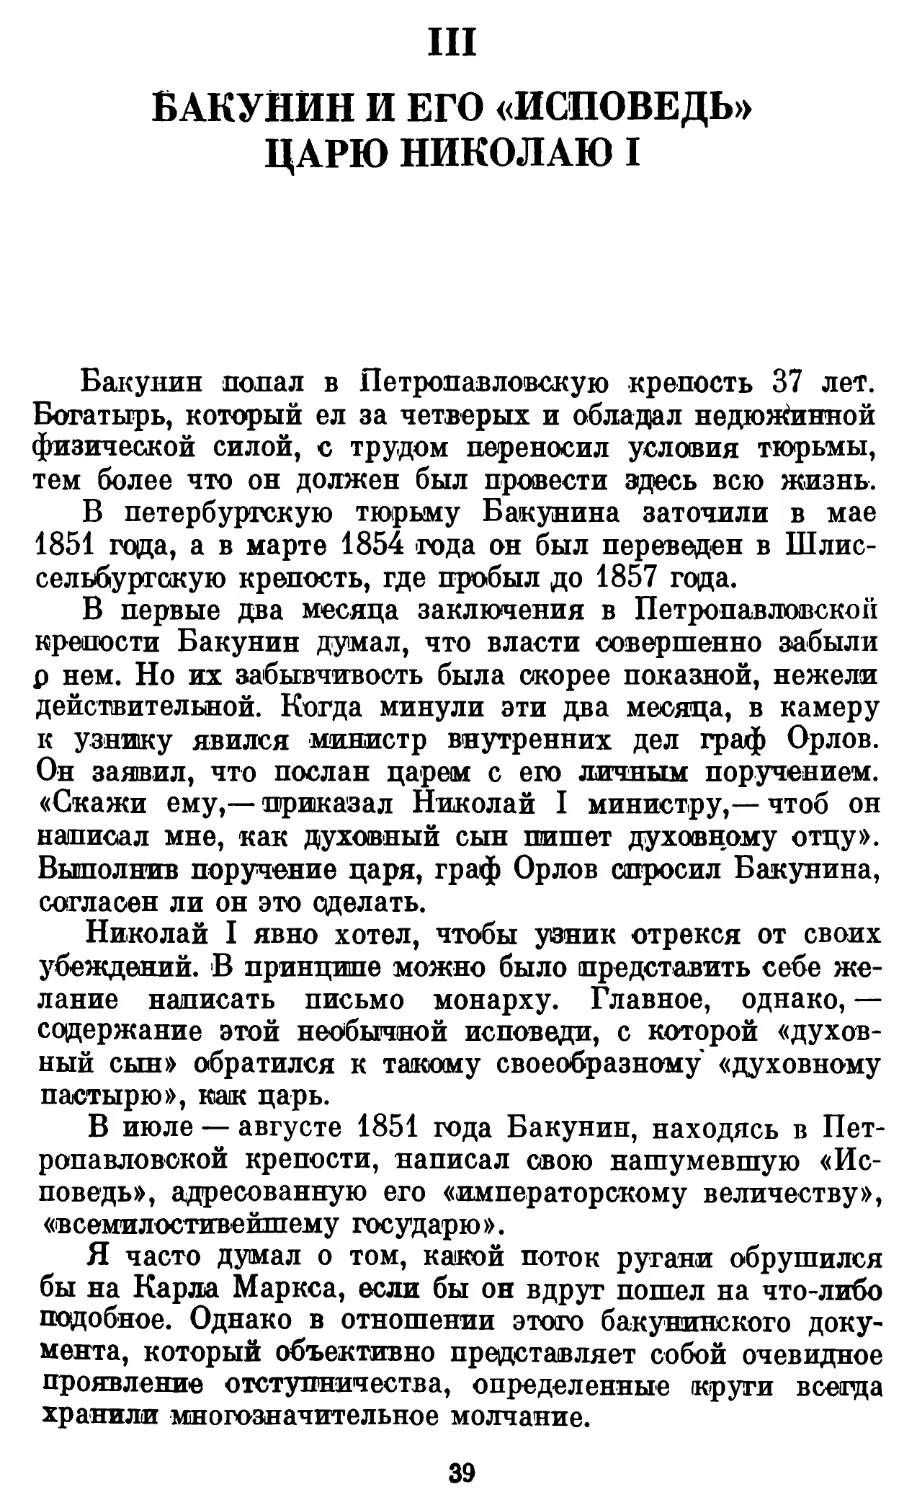 III. Бакунин и его «Исповедь» царю Николаю I